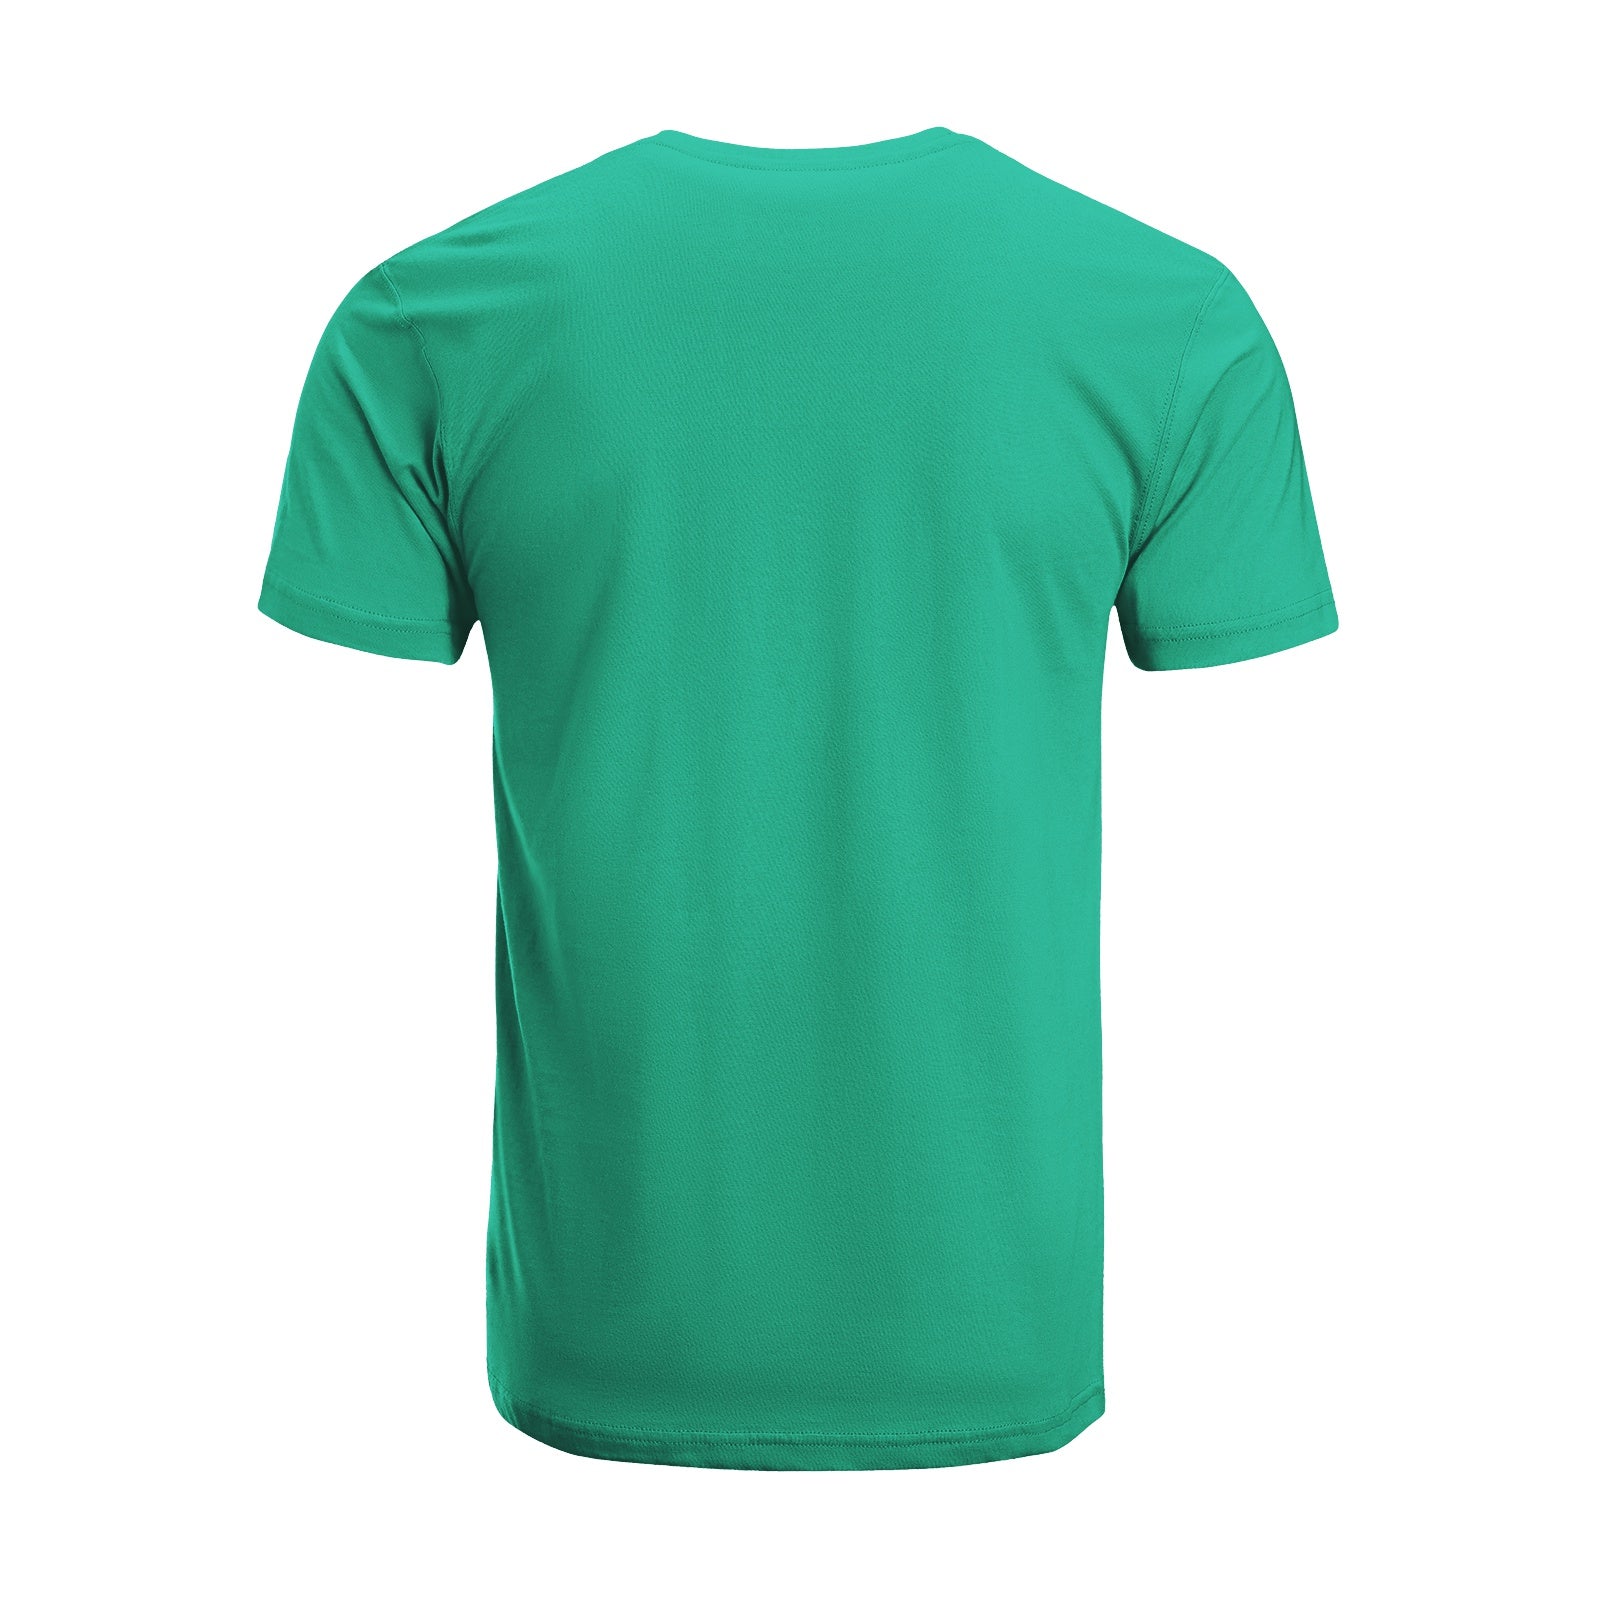 Unisex Short Sleeve Crew Neck Cotton Jersey T-Shirt CAT 05 - Tara-Outfits.com